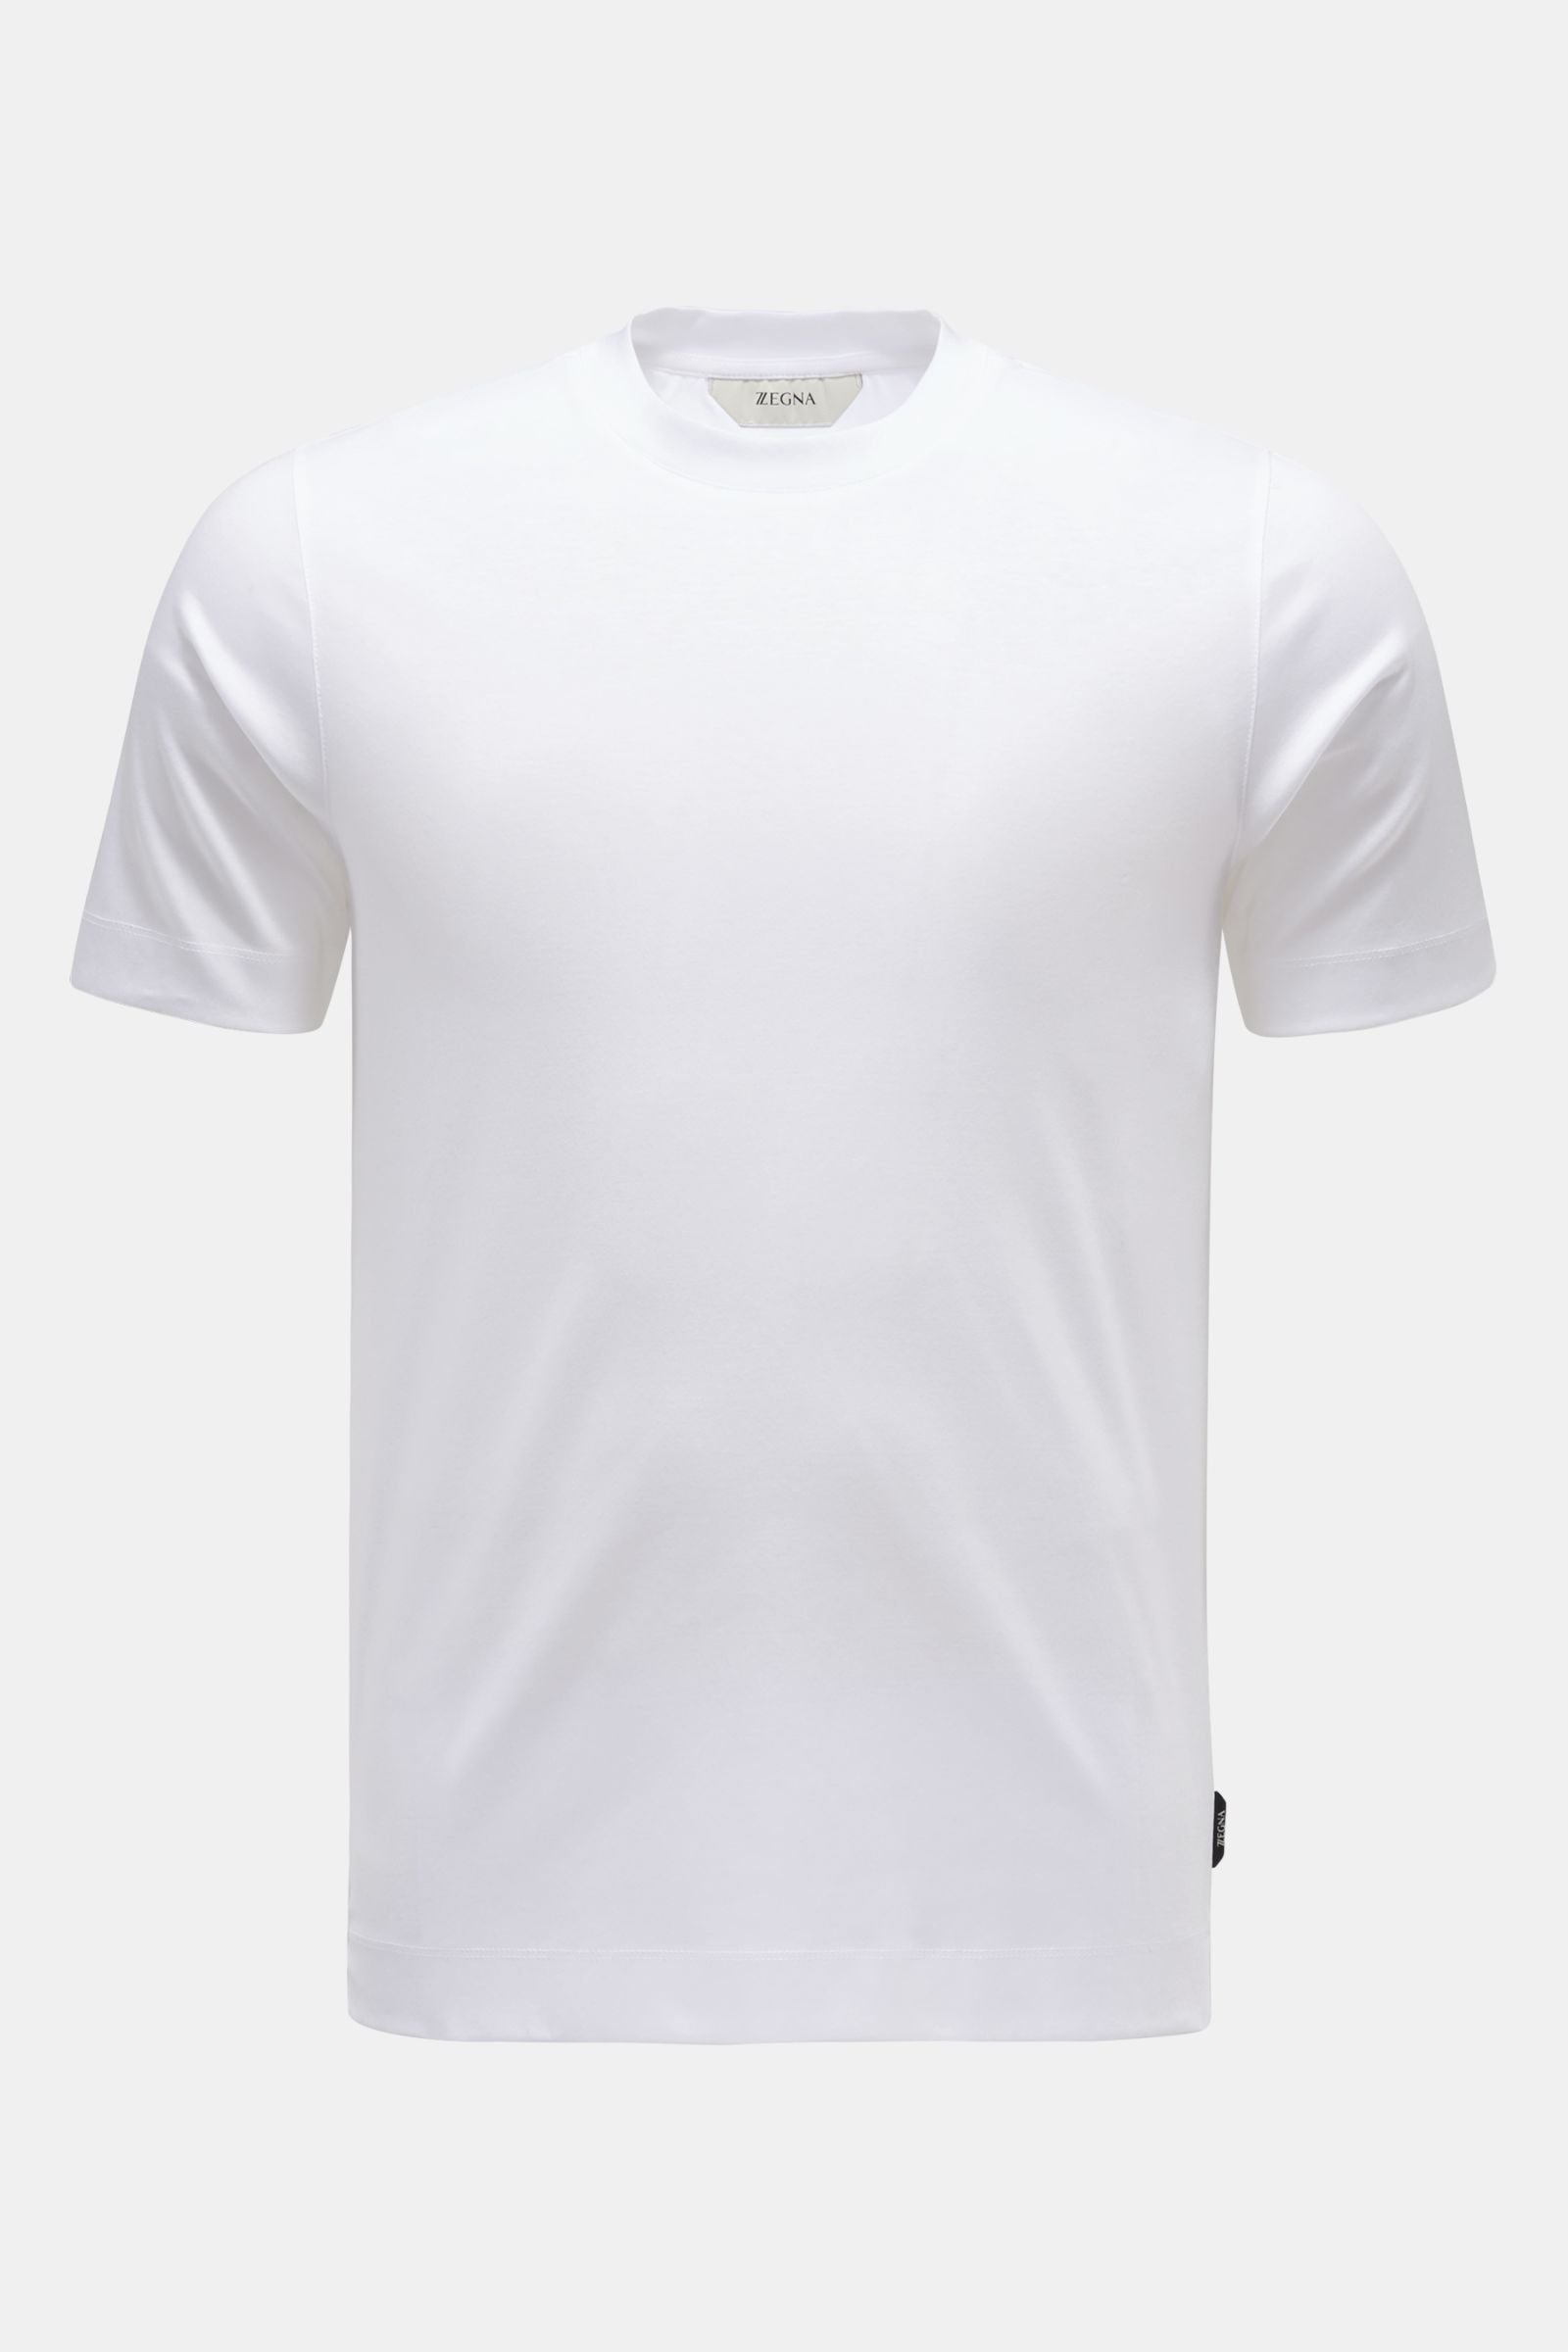 Crew neck T-shirt white